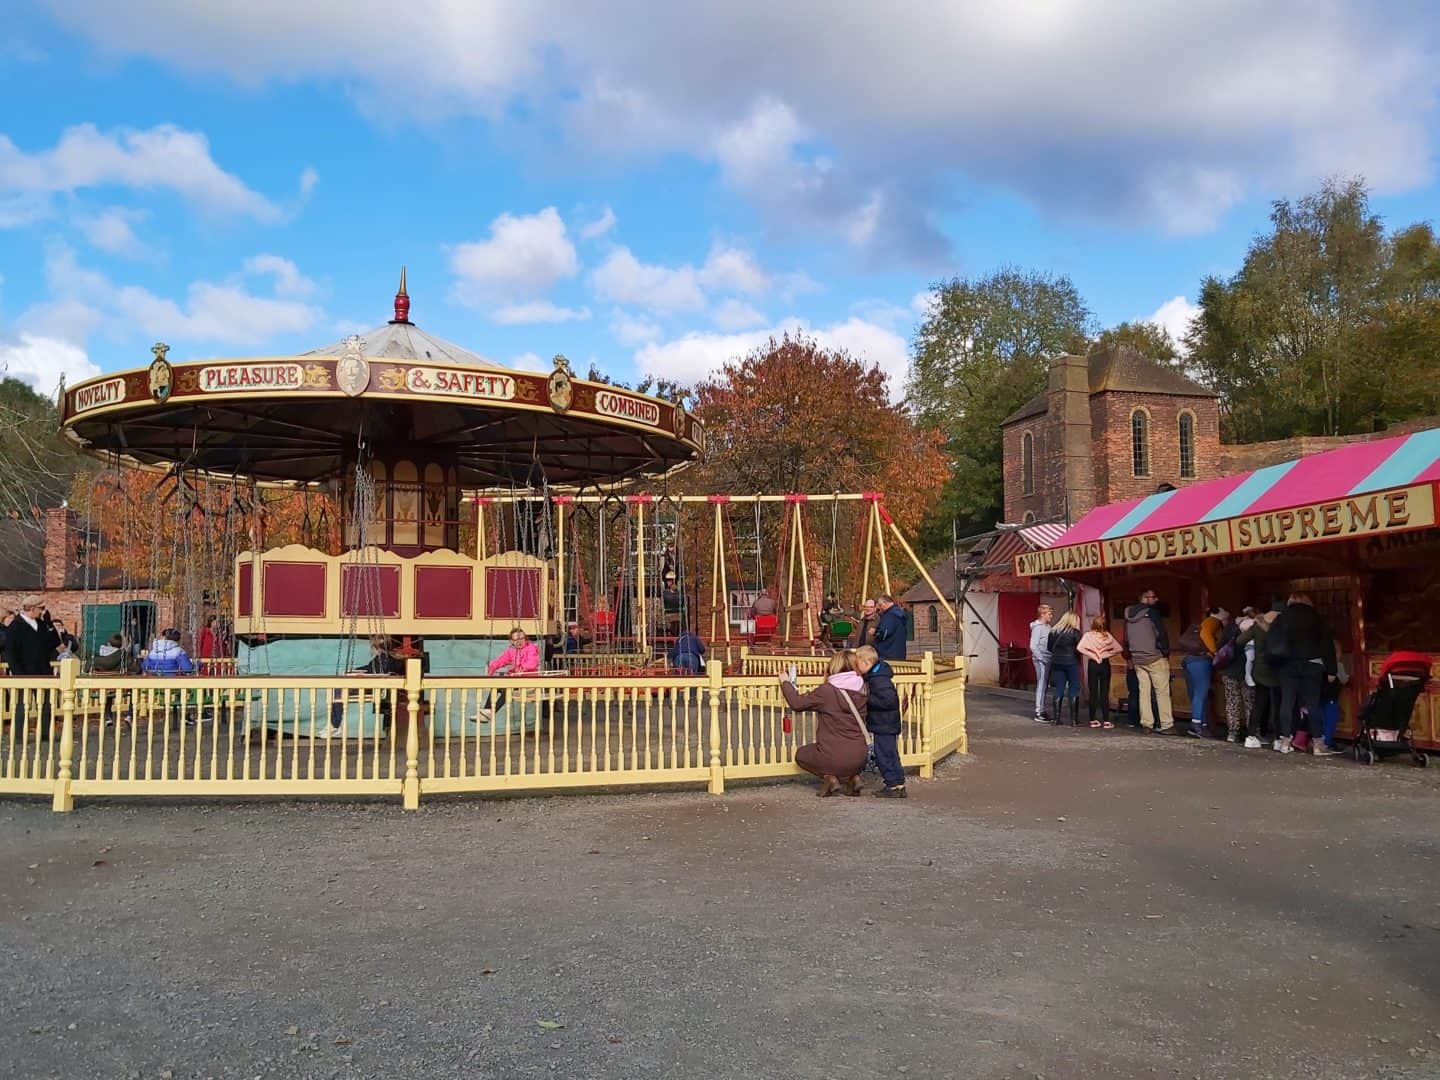 Carousel at Victorian fairground